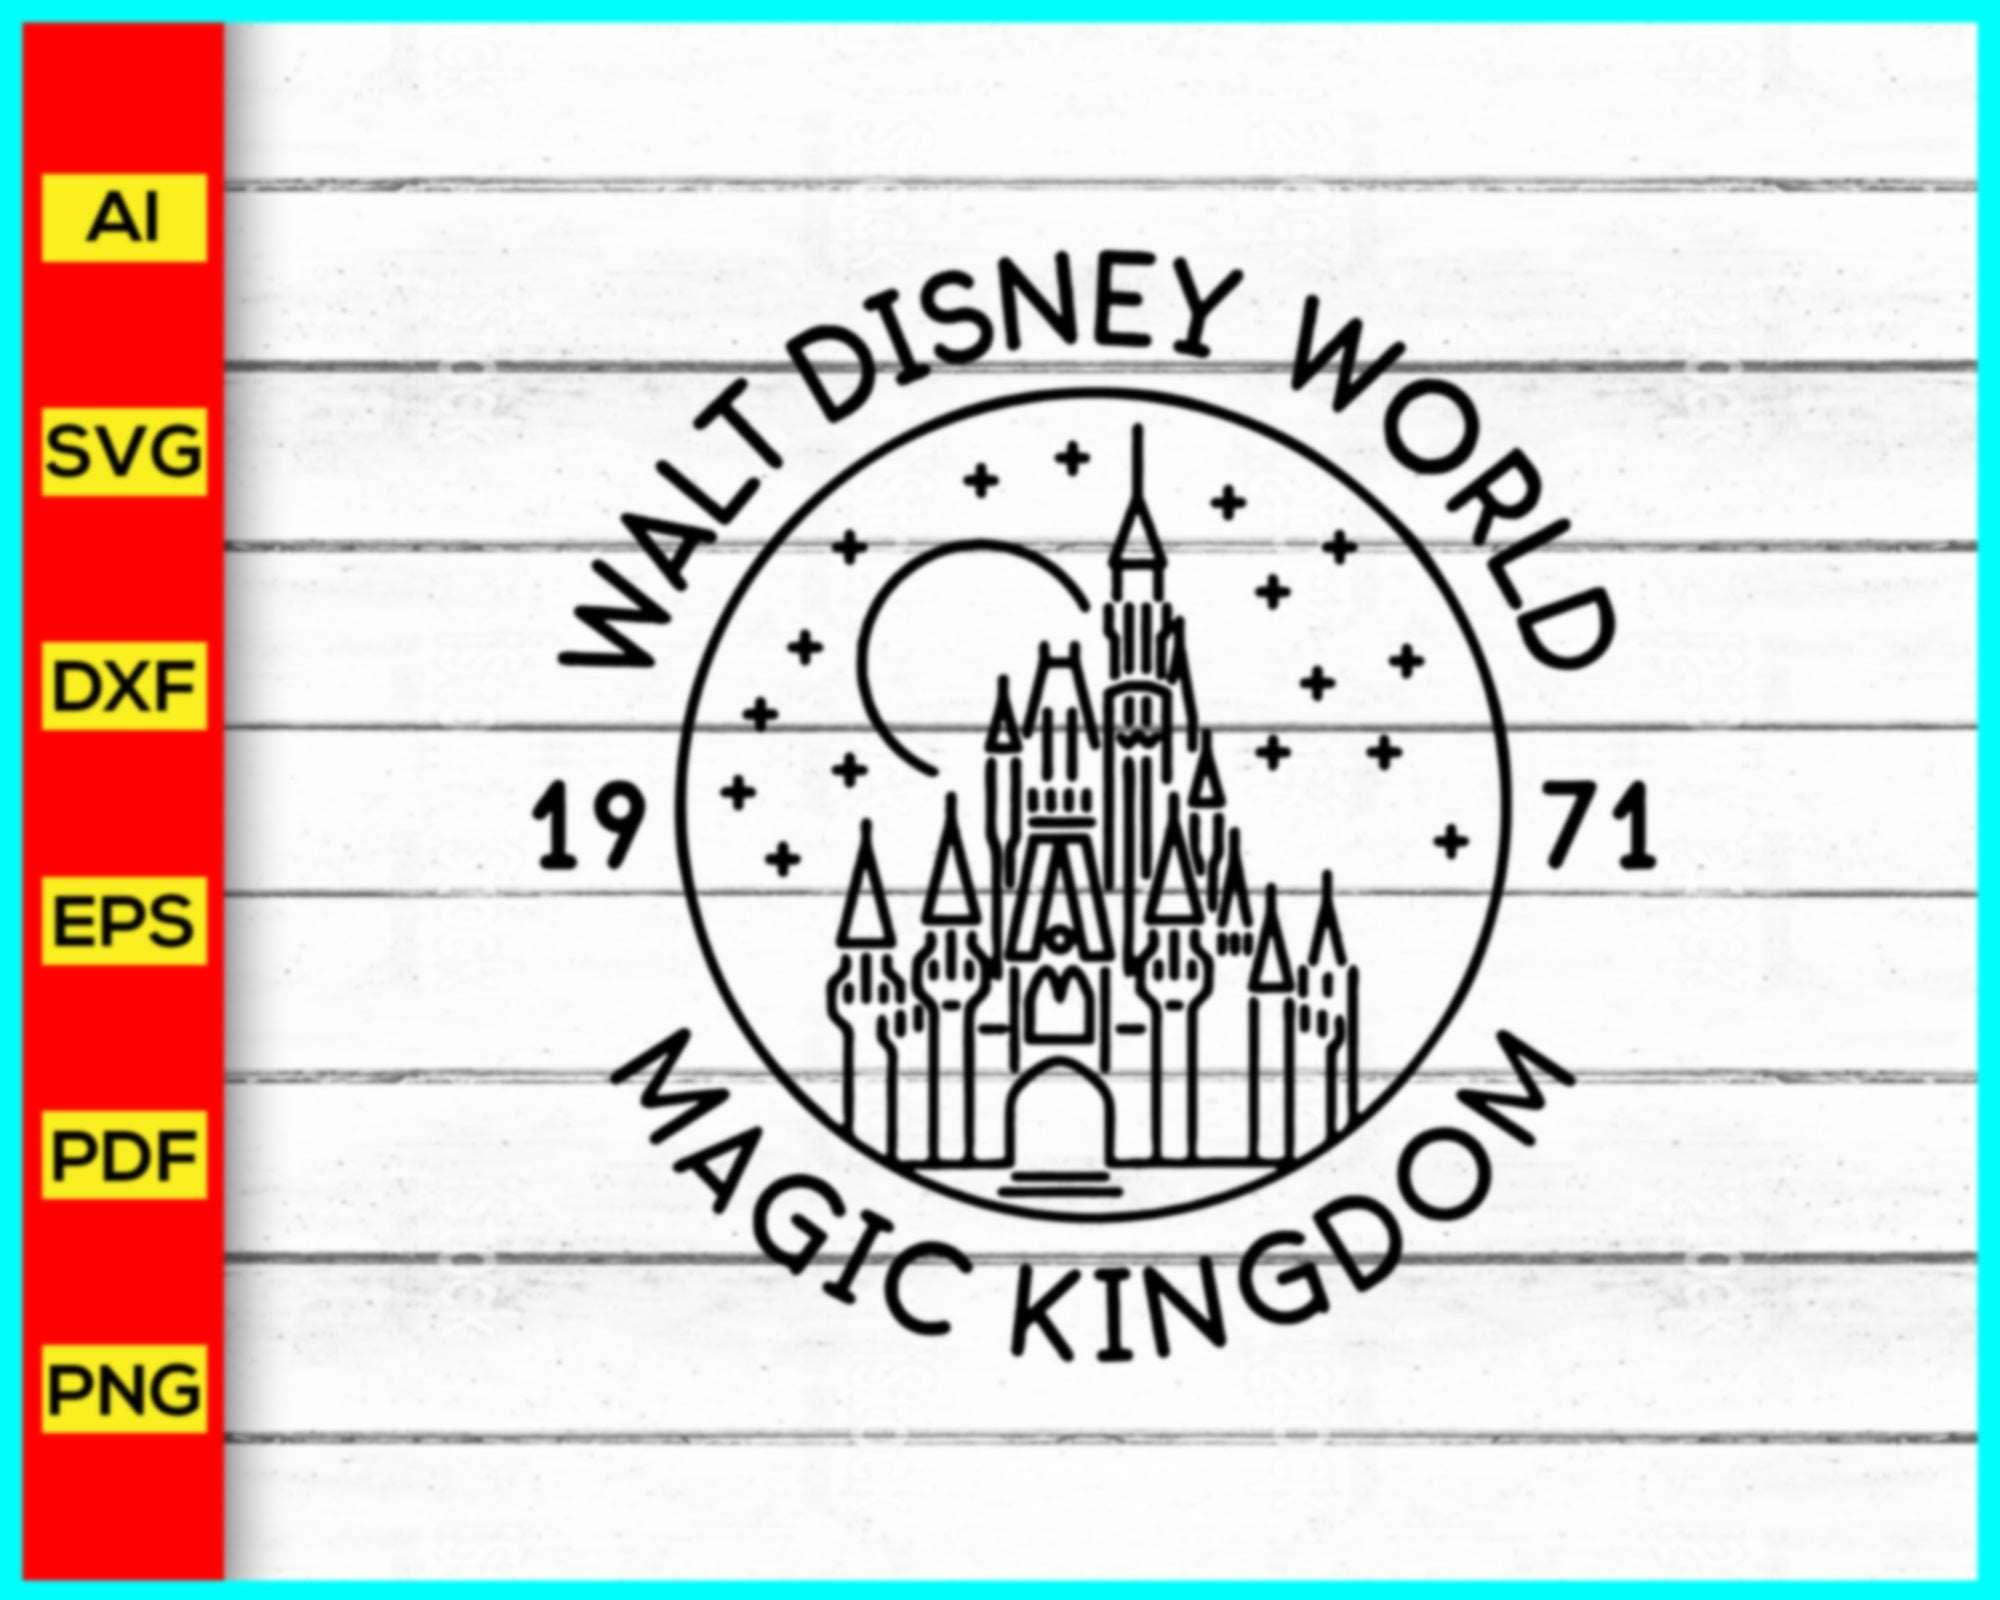 magic kingdom logo png